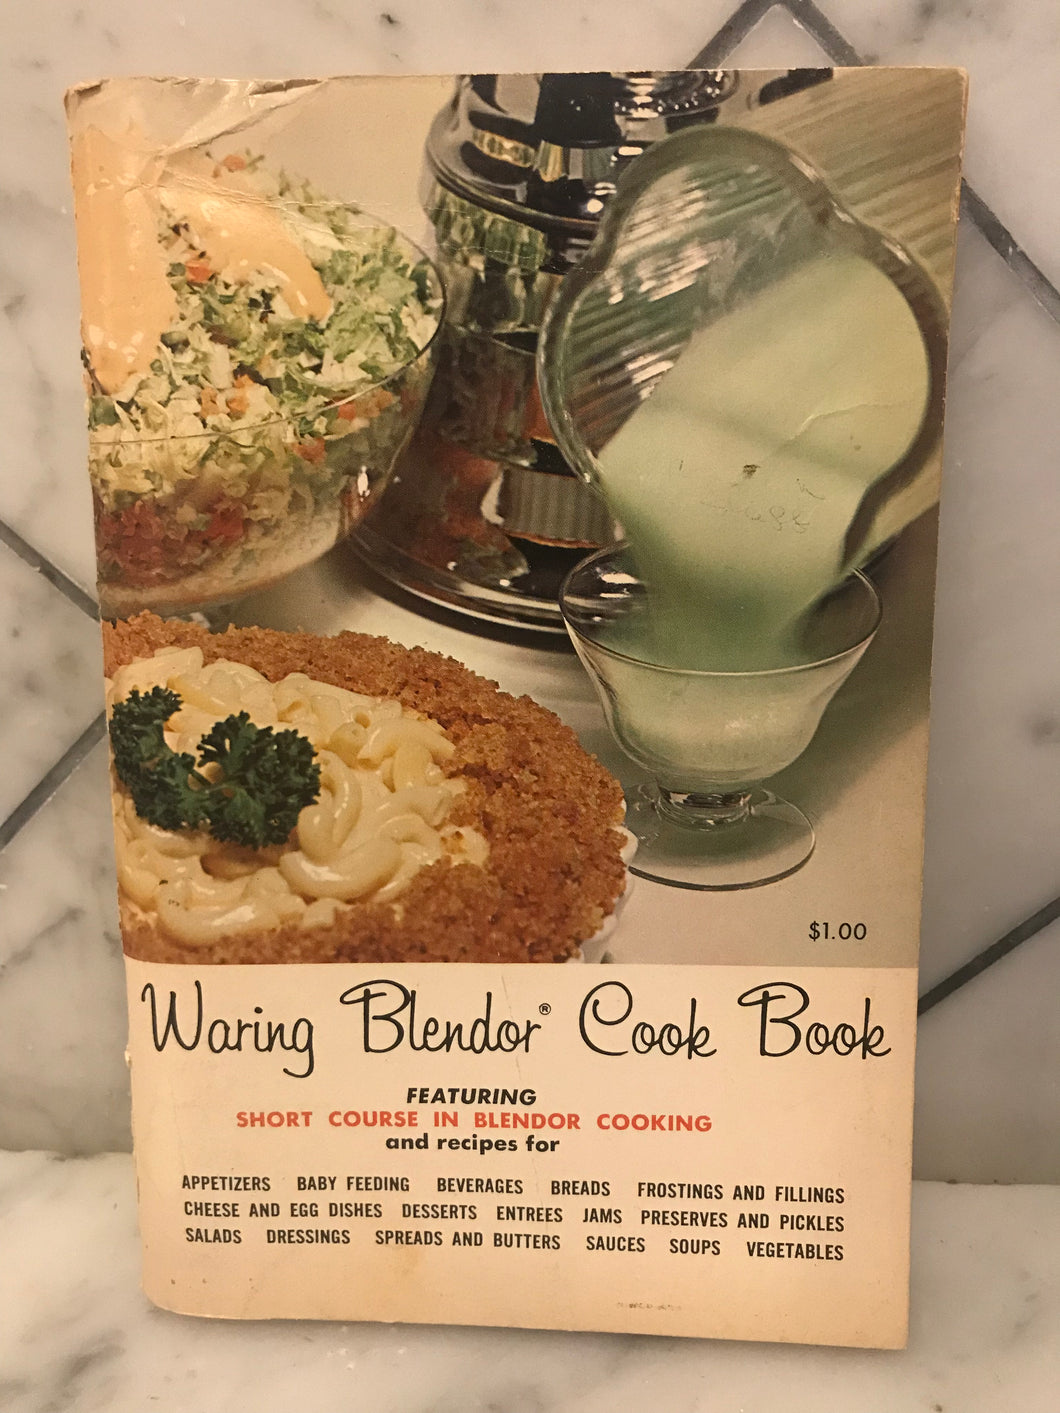 Waring Blendor Cook Book, Featuring Short Course in Blendor Cooking